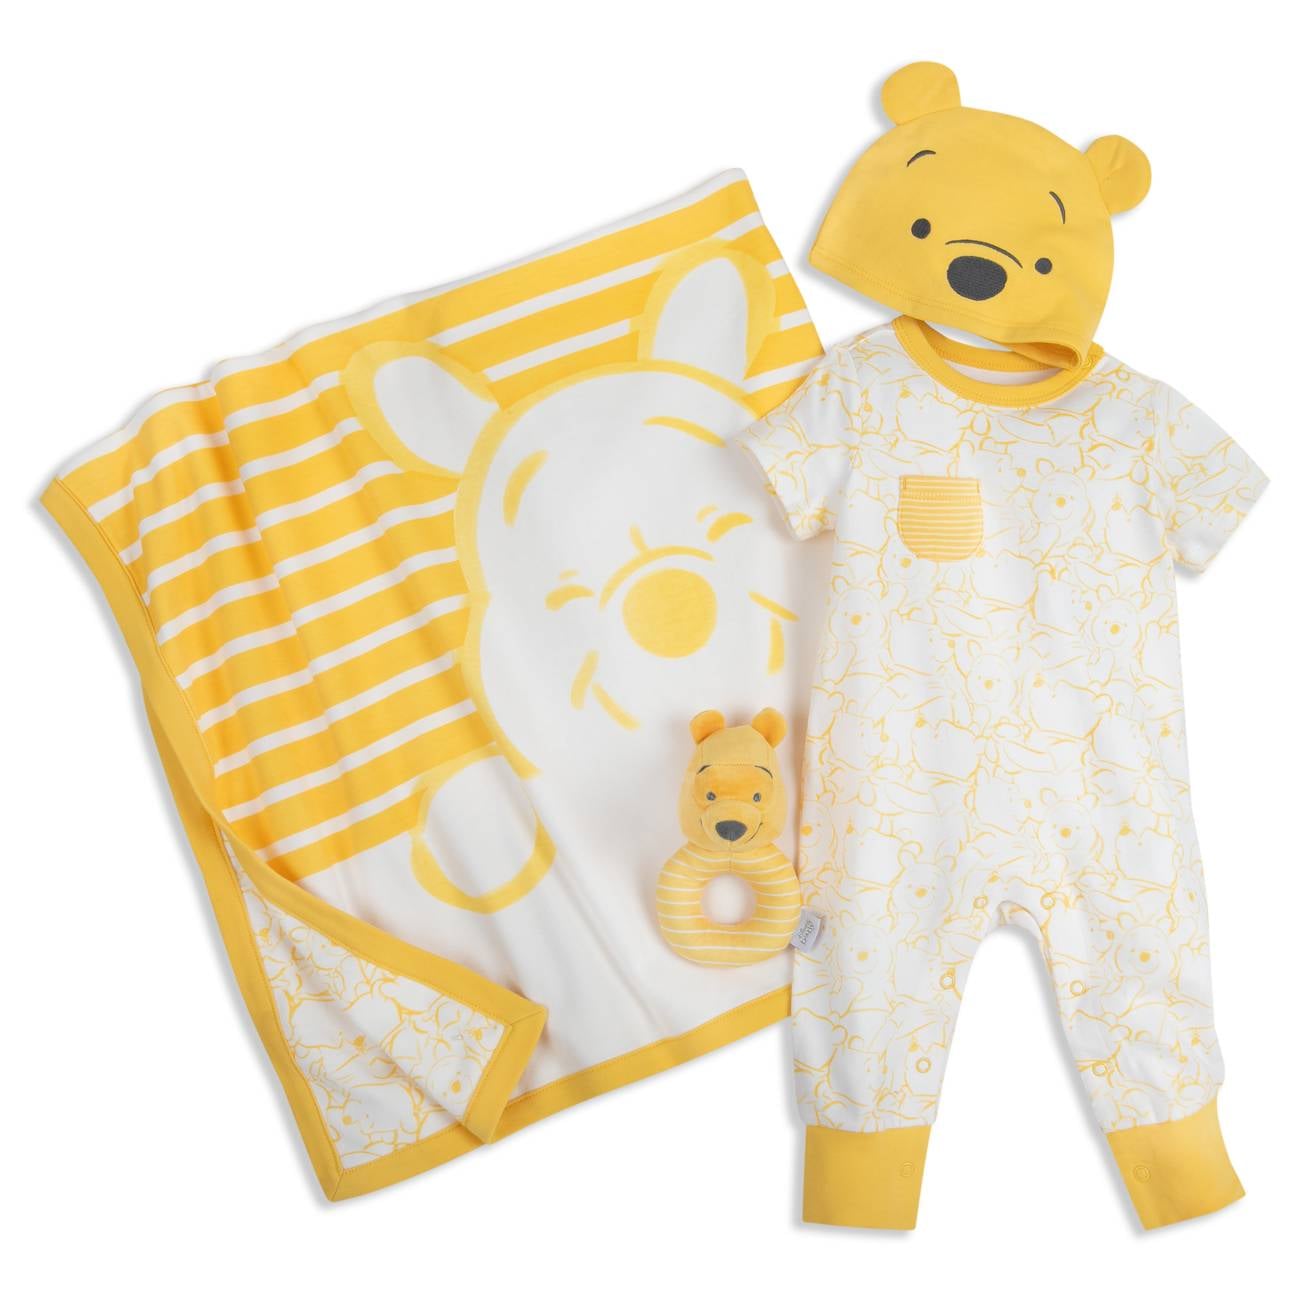 Cudlie Accessories Disney Baby Winnie The Pooh Hooded Towel with 5